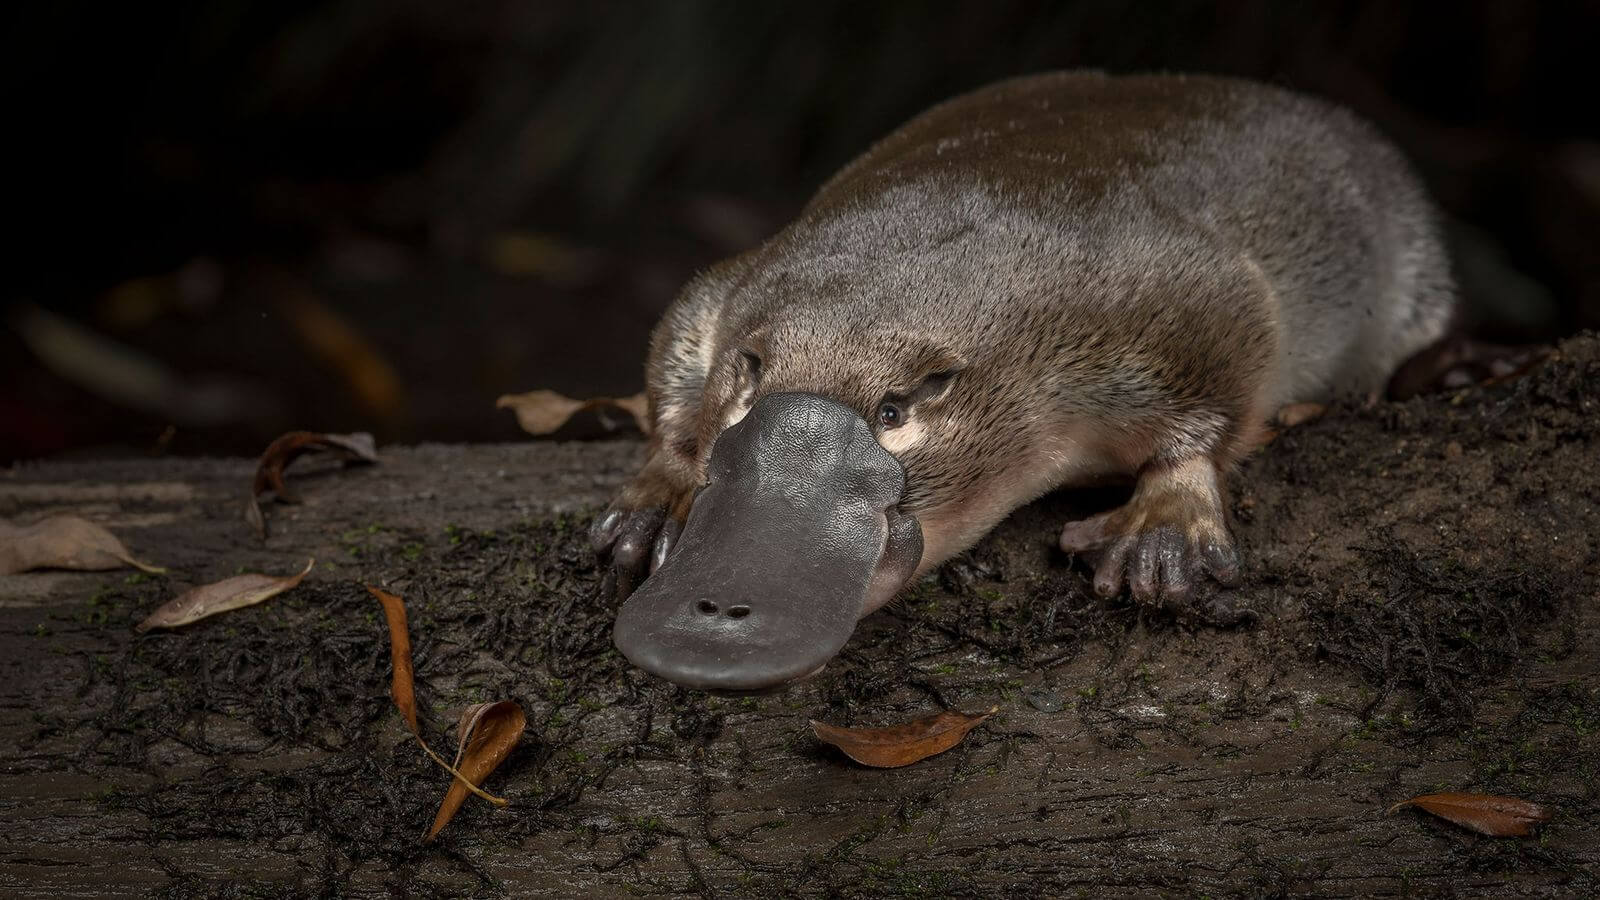 Animal facts - the platypus.